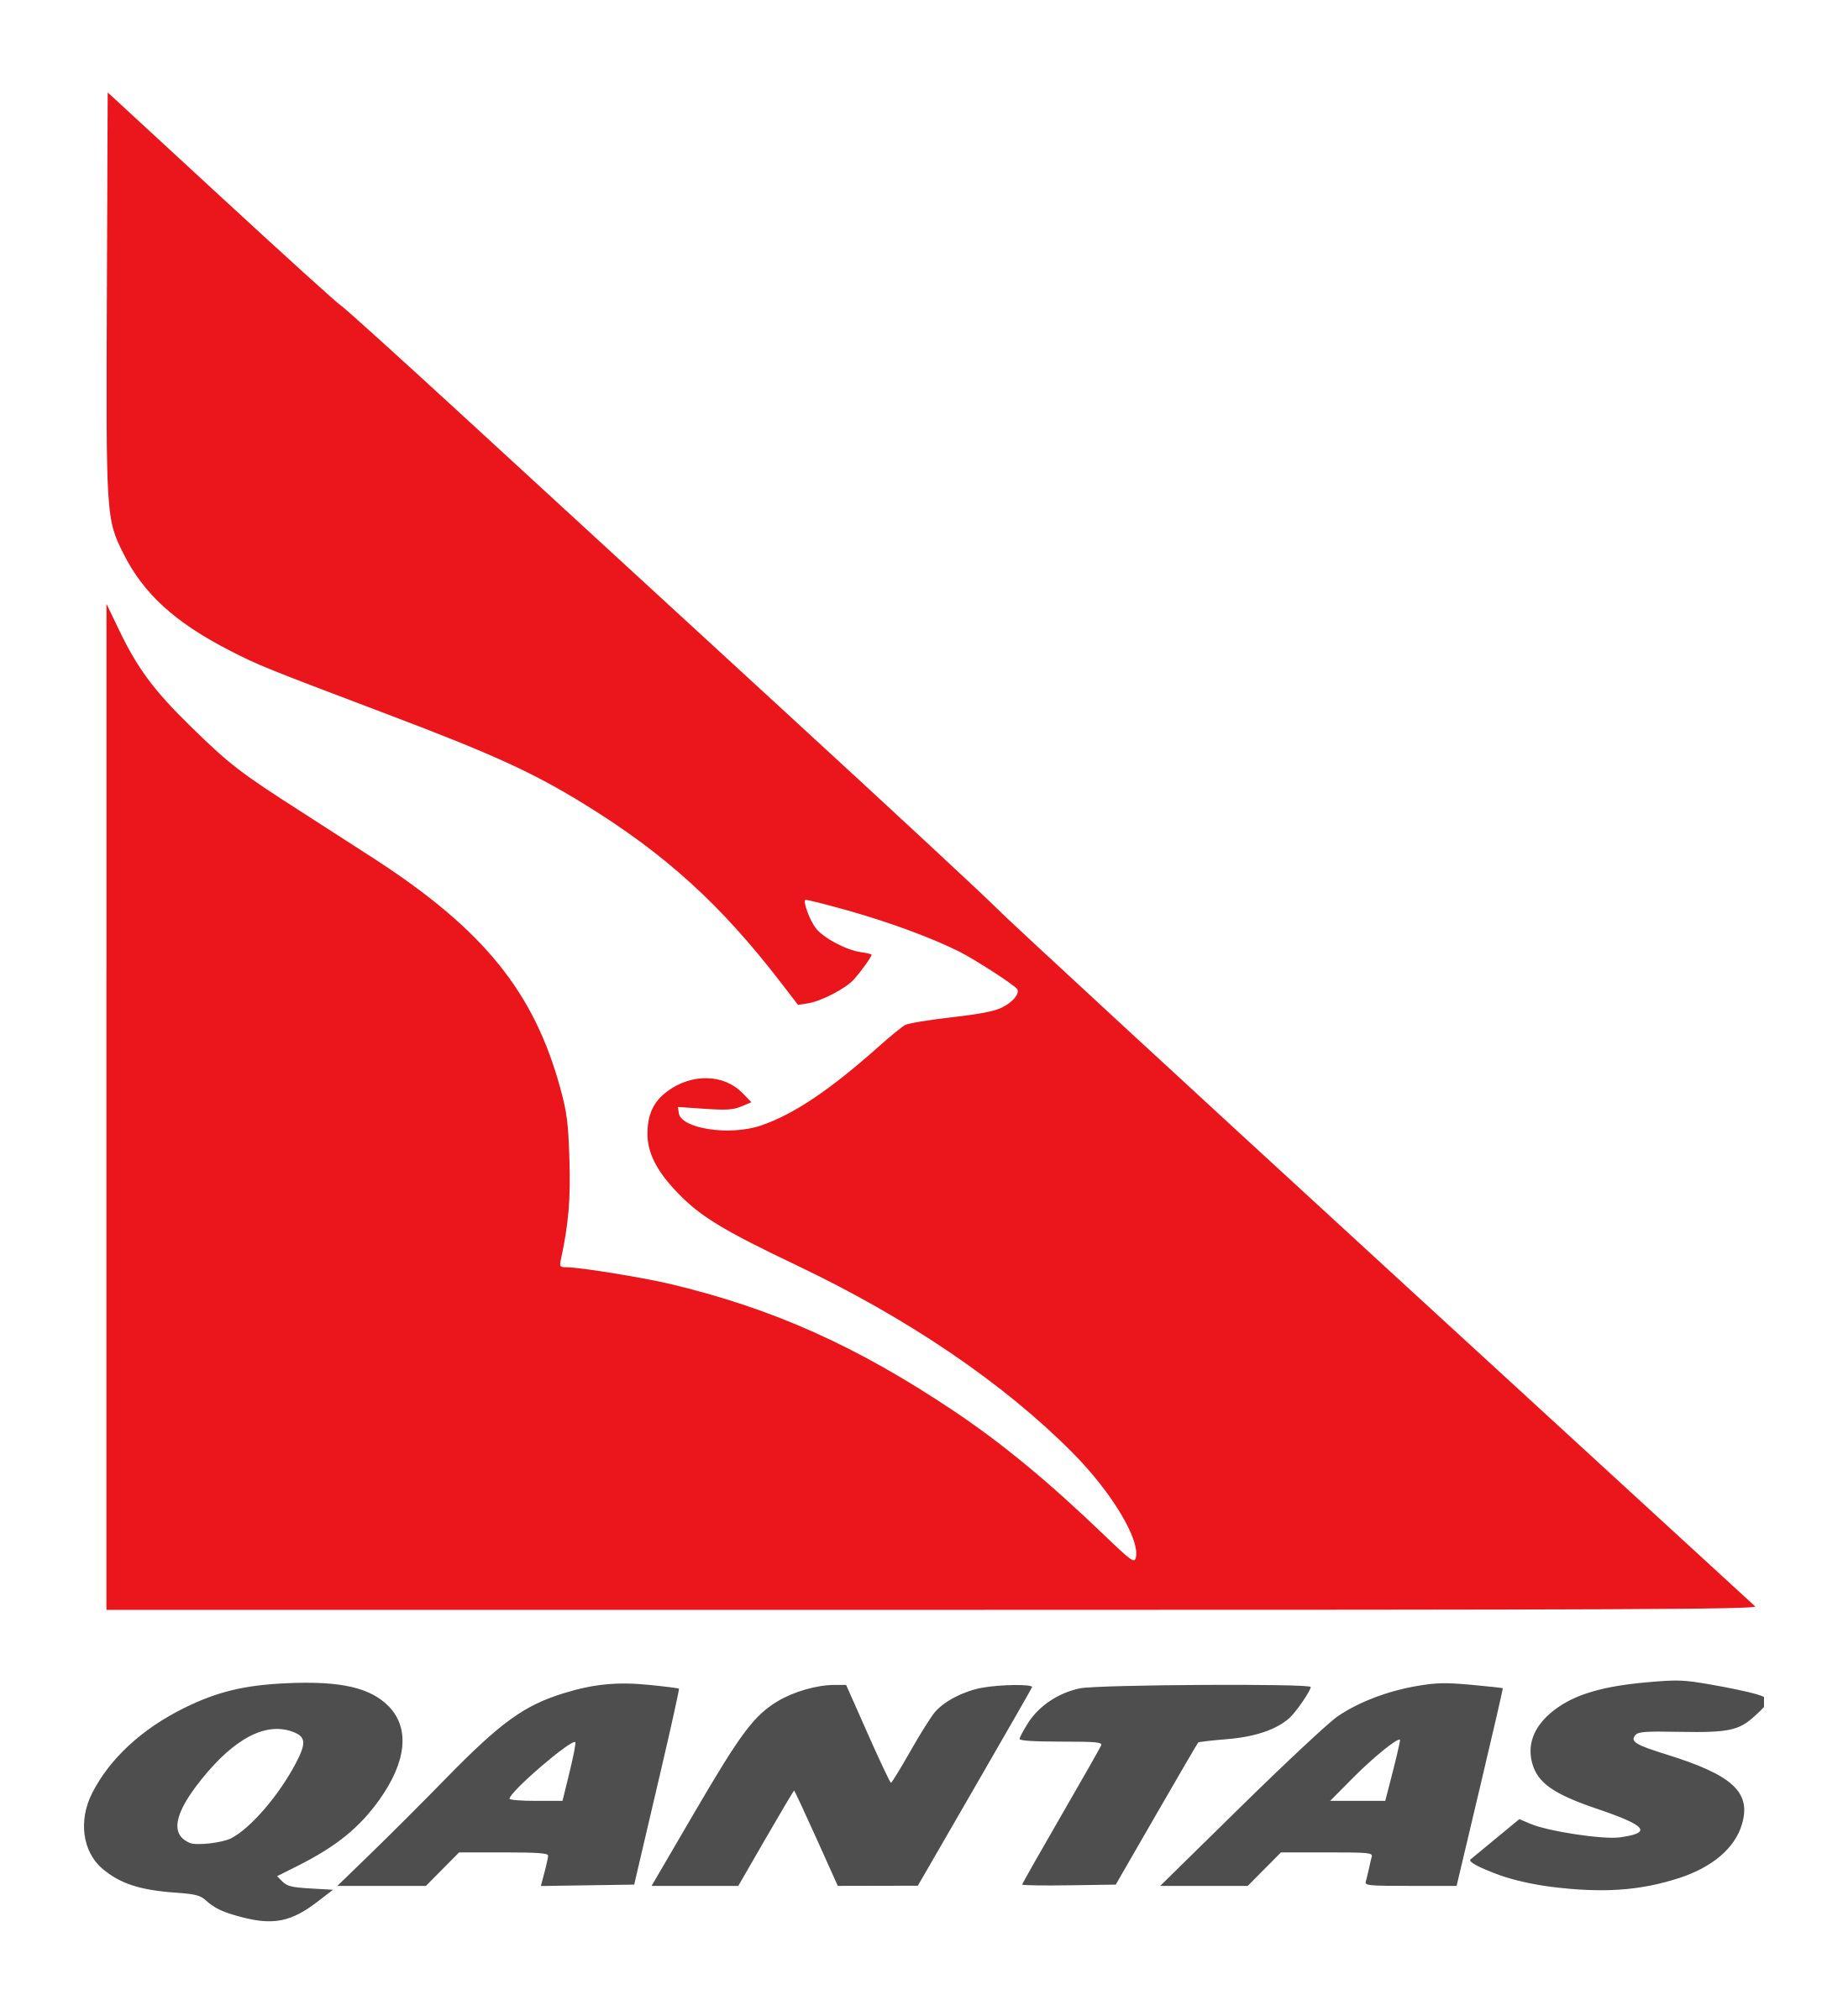 Kangaroo Red Circle Inside Logo - Qantas Logo, Qantas Symbol, Meaning, History and Evolution